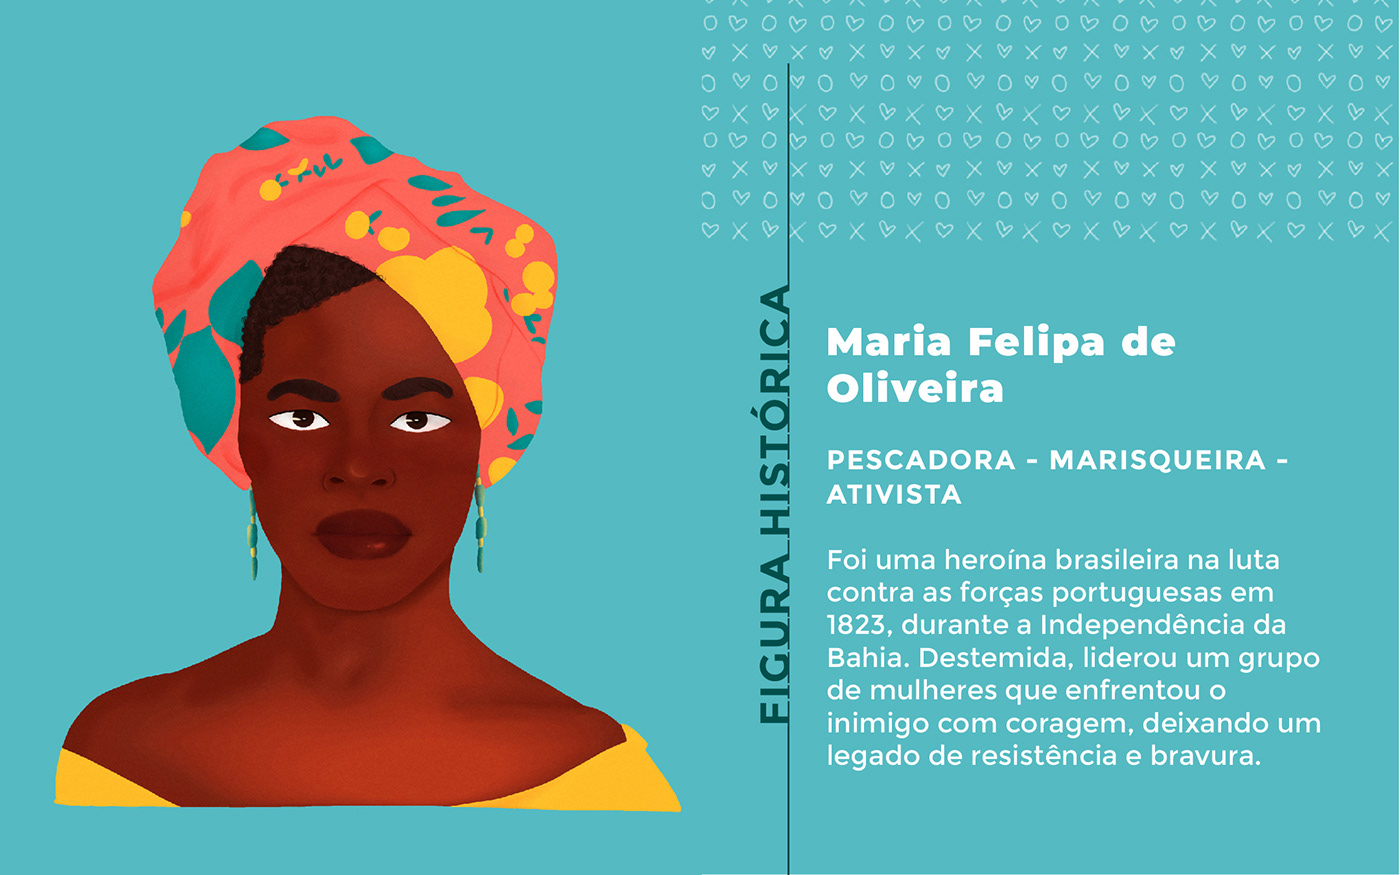 An illustrated portrait of Maria Felipa a brazilian heroe from Bahia.
